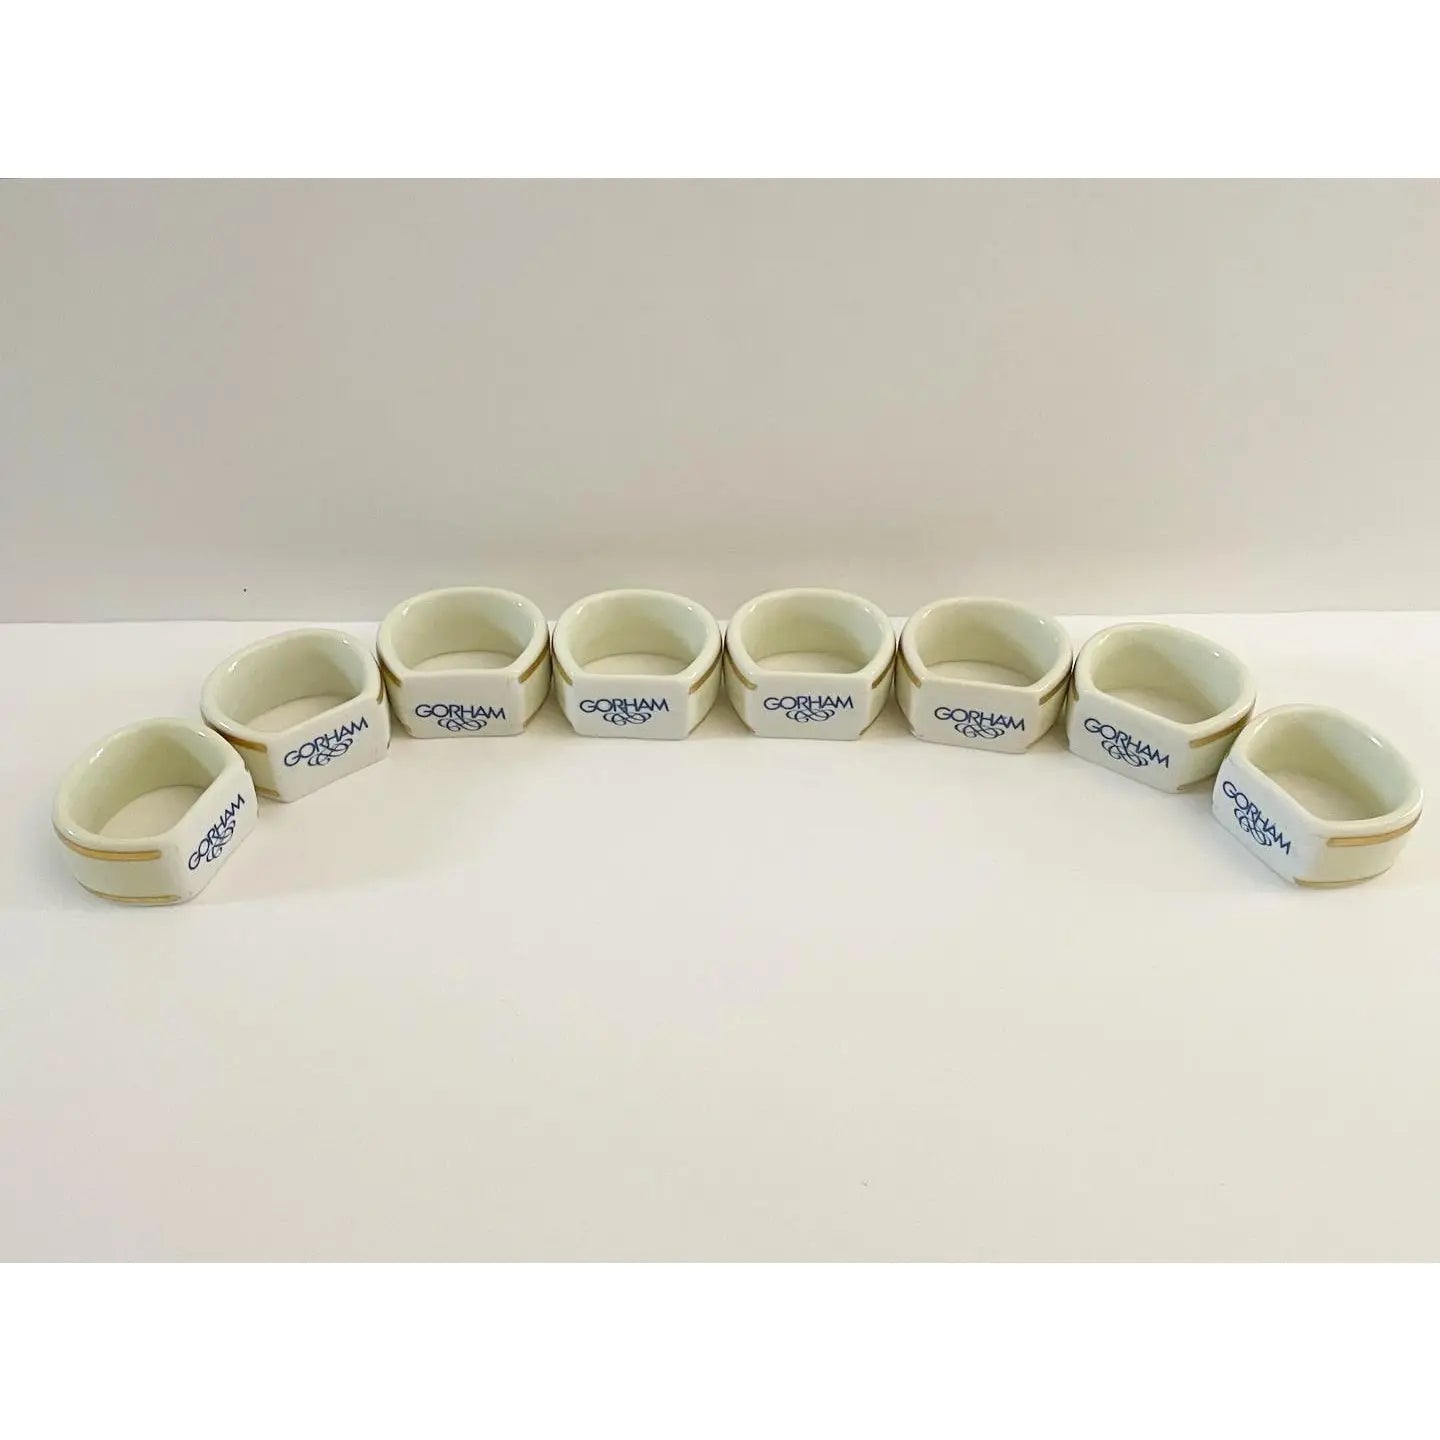 Mid 20th Century Vintage Porcelain Napkin Rings by Gorham